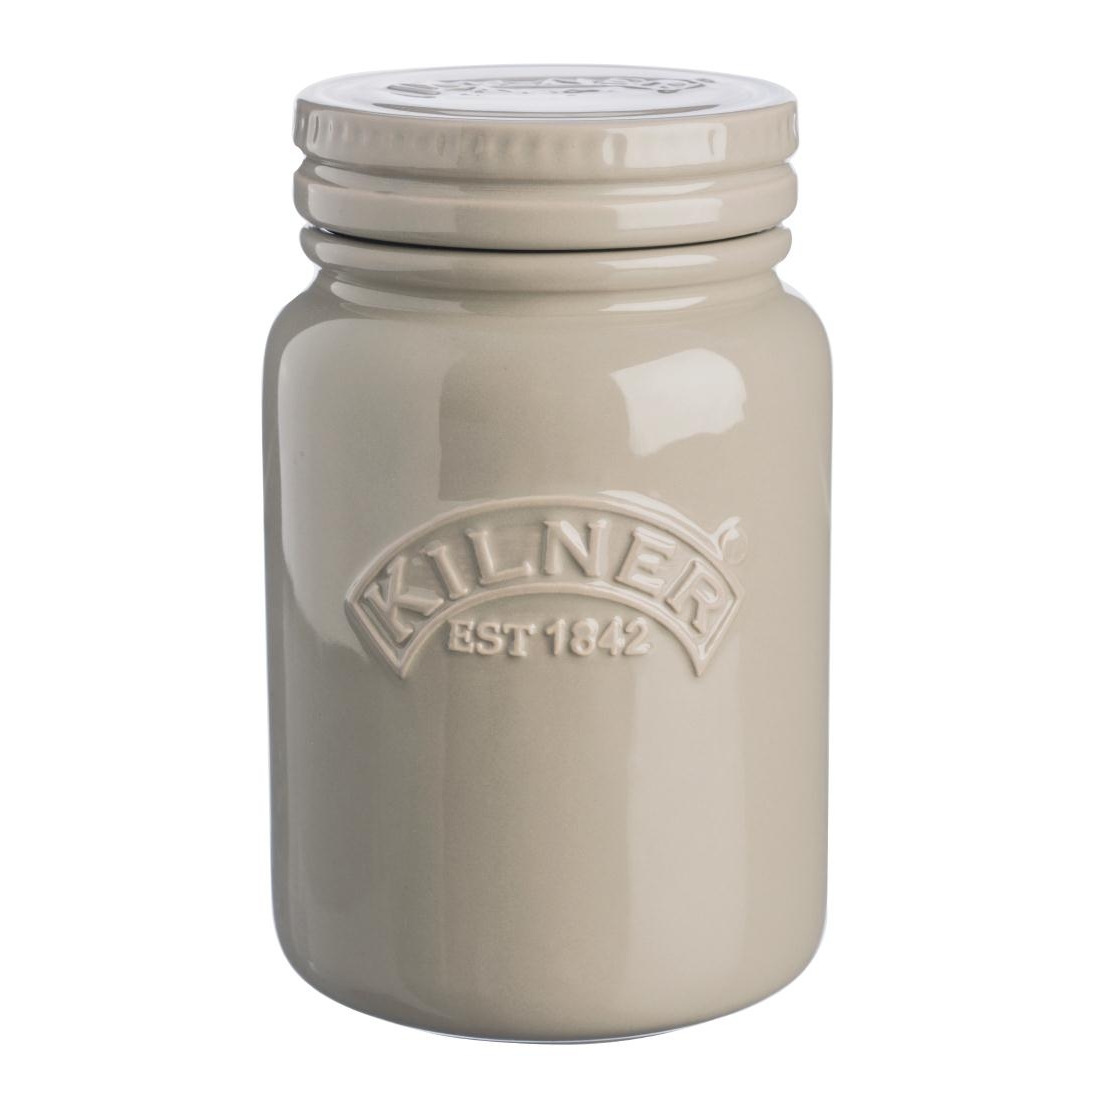 Kilner Ceramic Storage Jar Pebble Grey 600ml